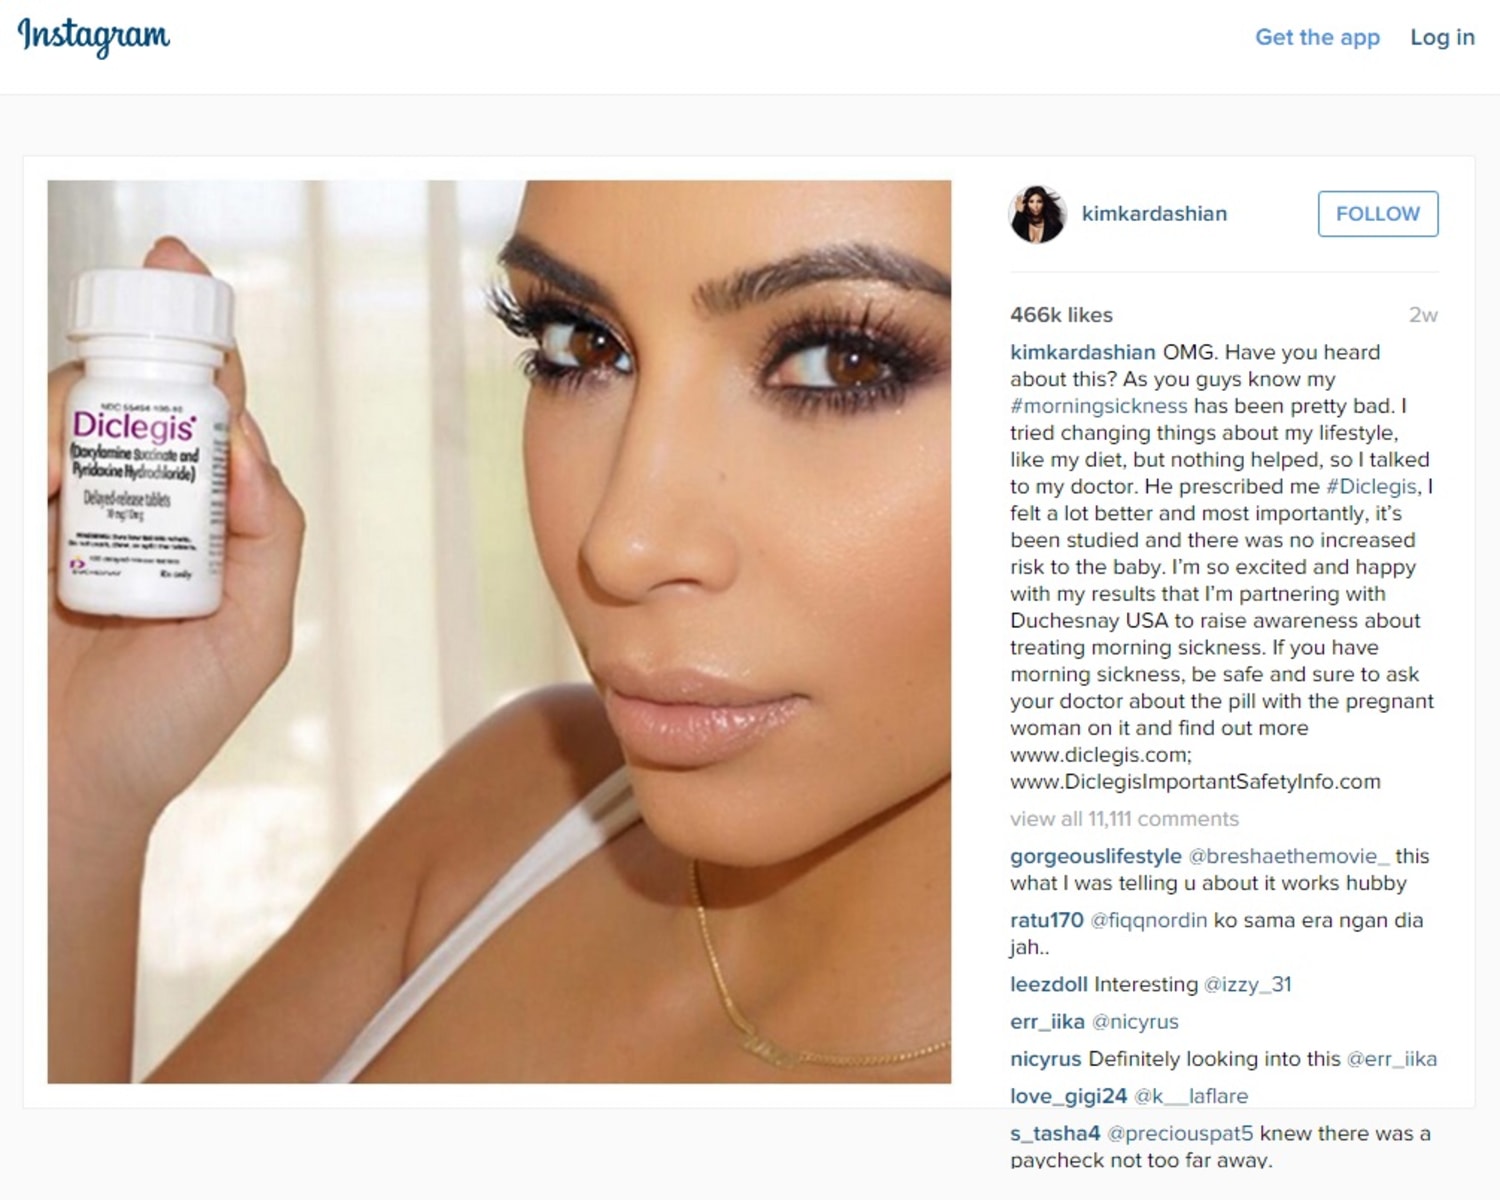 FDA Warns Kim Kardashian About Instagram Drug Endorsement